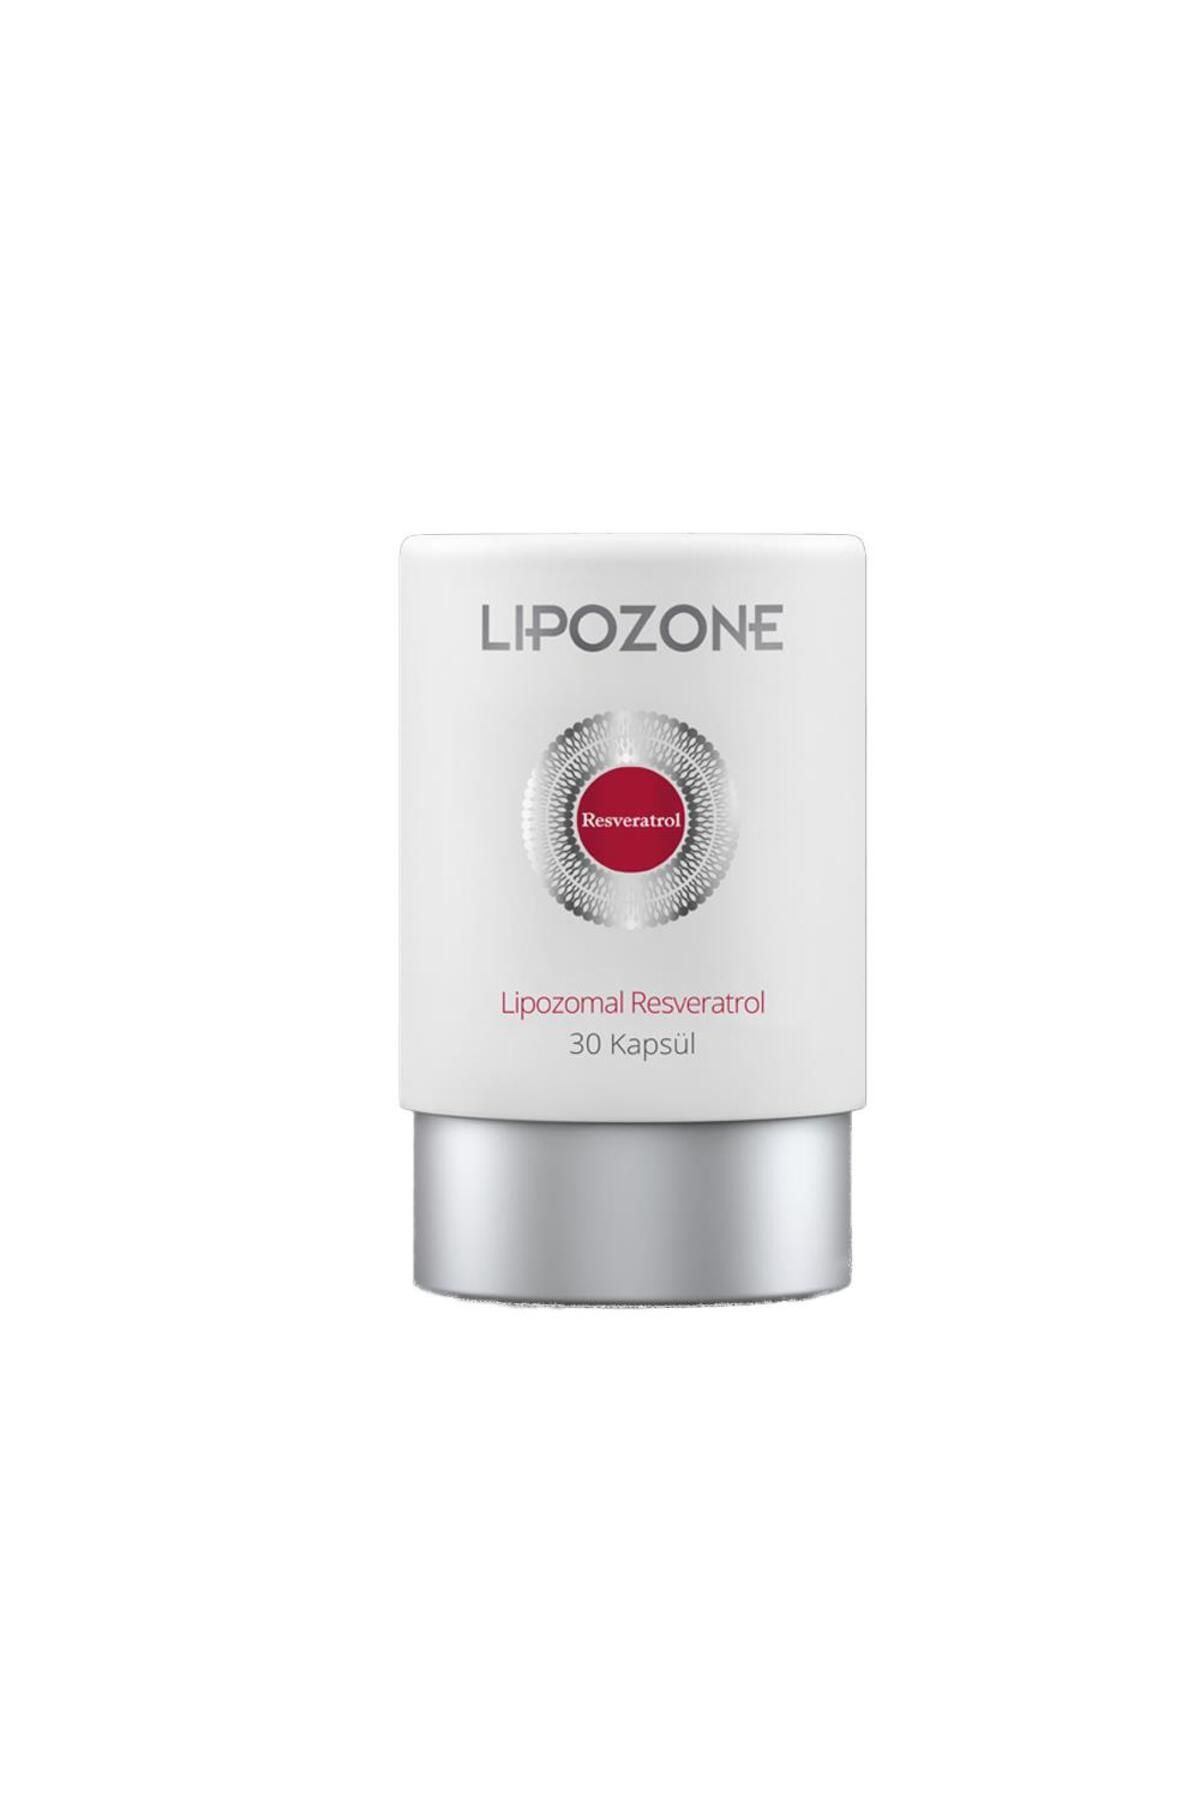 Lipozone Lipozomal Resveratrol 240 Mg 30 Kapsül